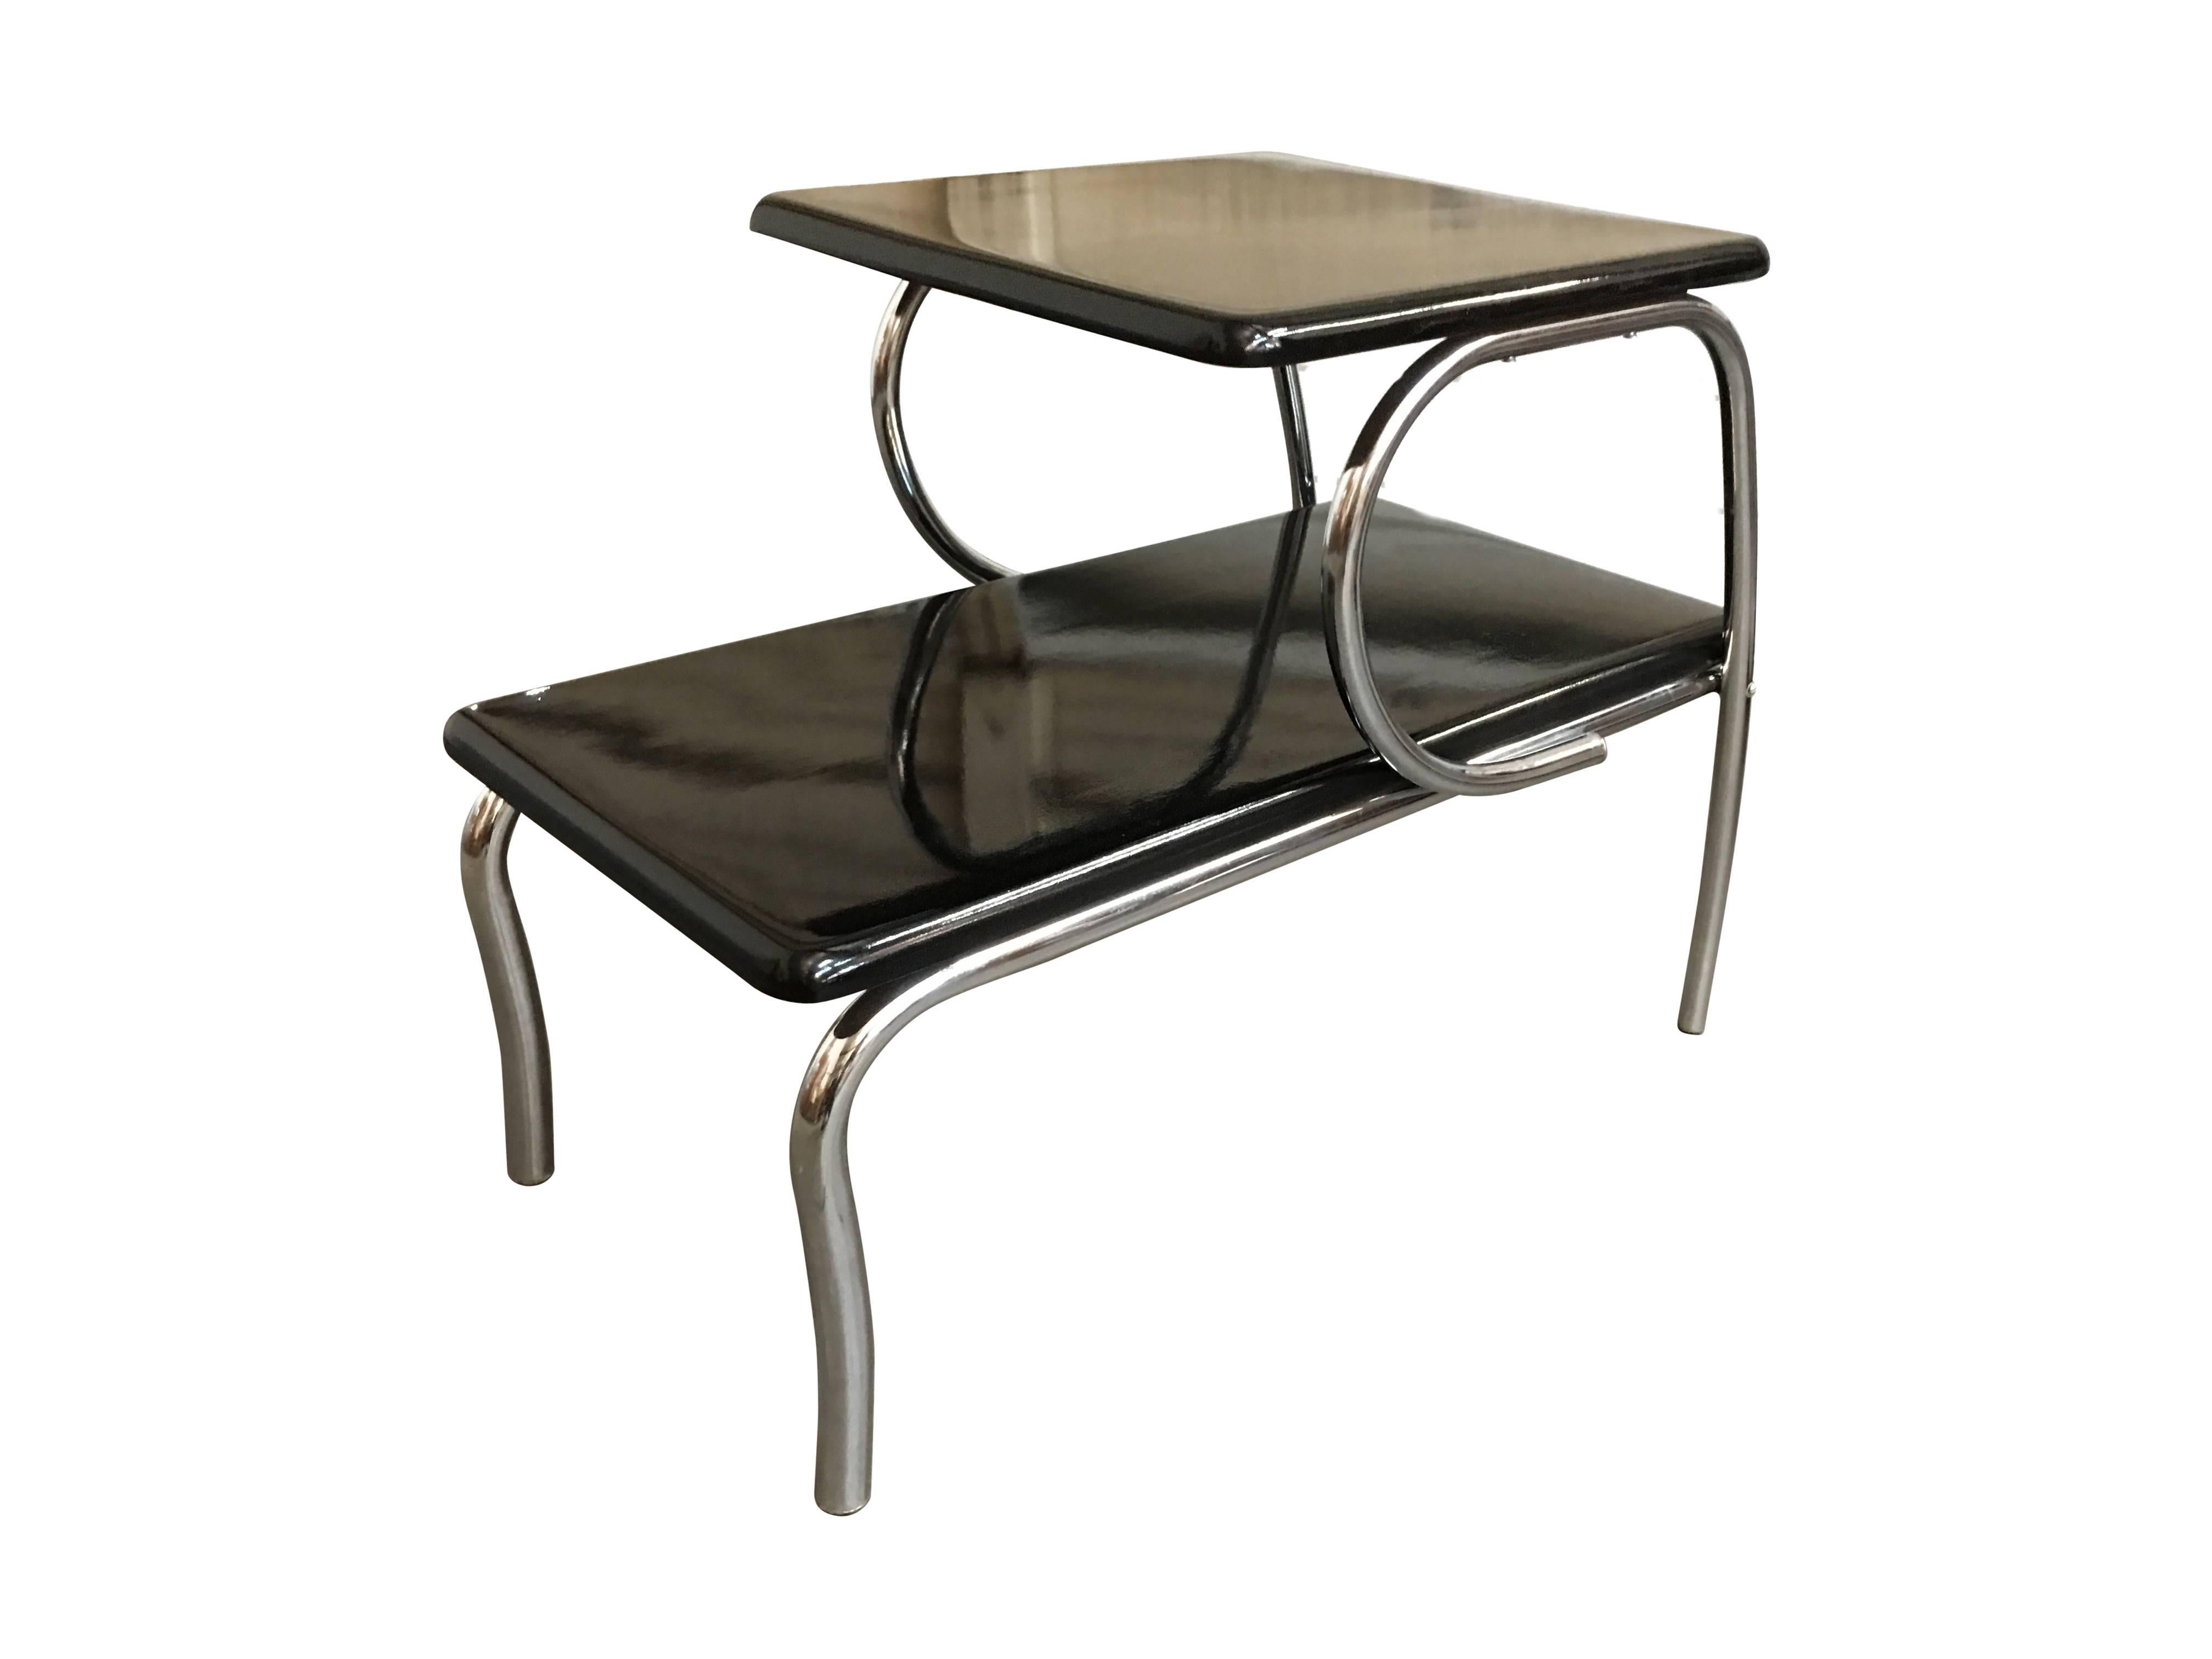 Streamlined Art Deco table inspired by Wolfgang Hoffmann. Chromed metal tubular 